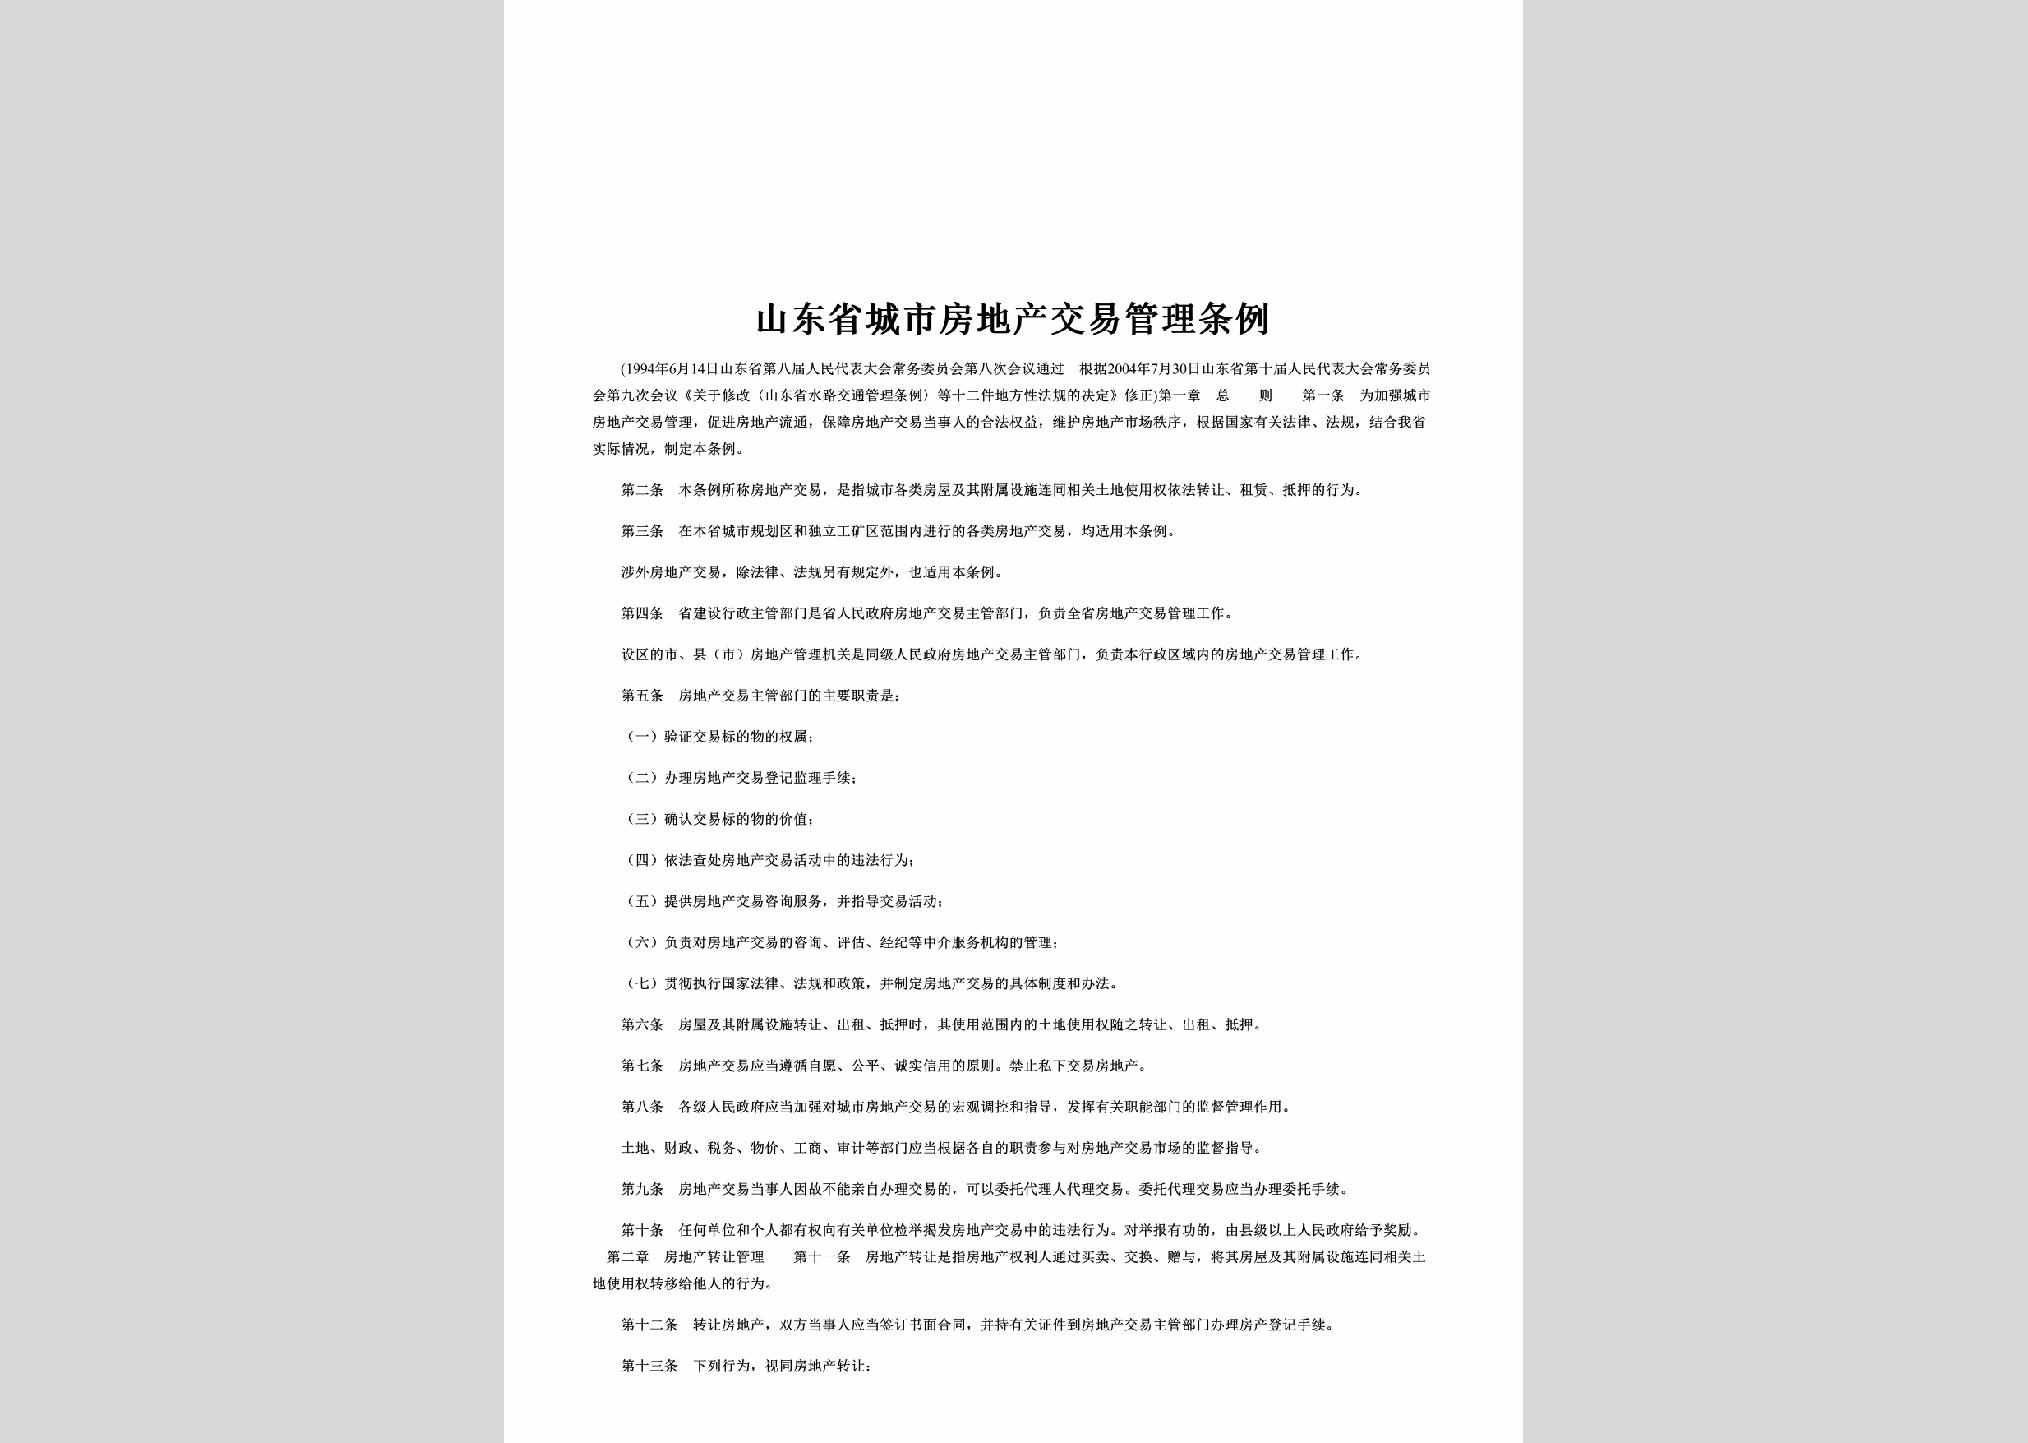 SD-CSFCJYTL-2013：山东省城市房地产交易管理条例